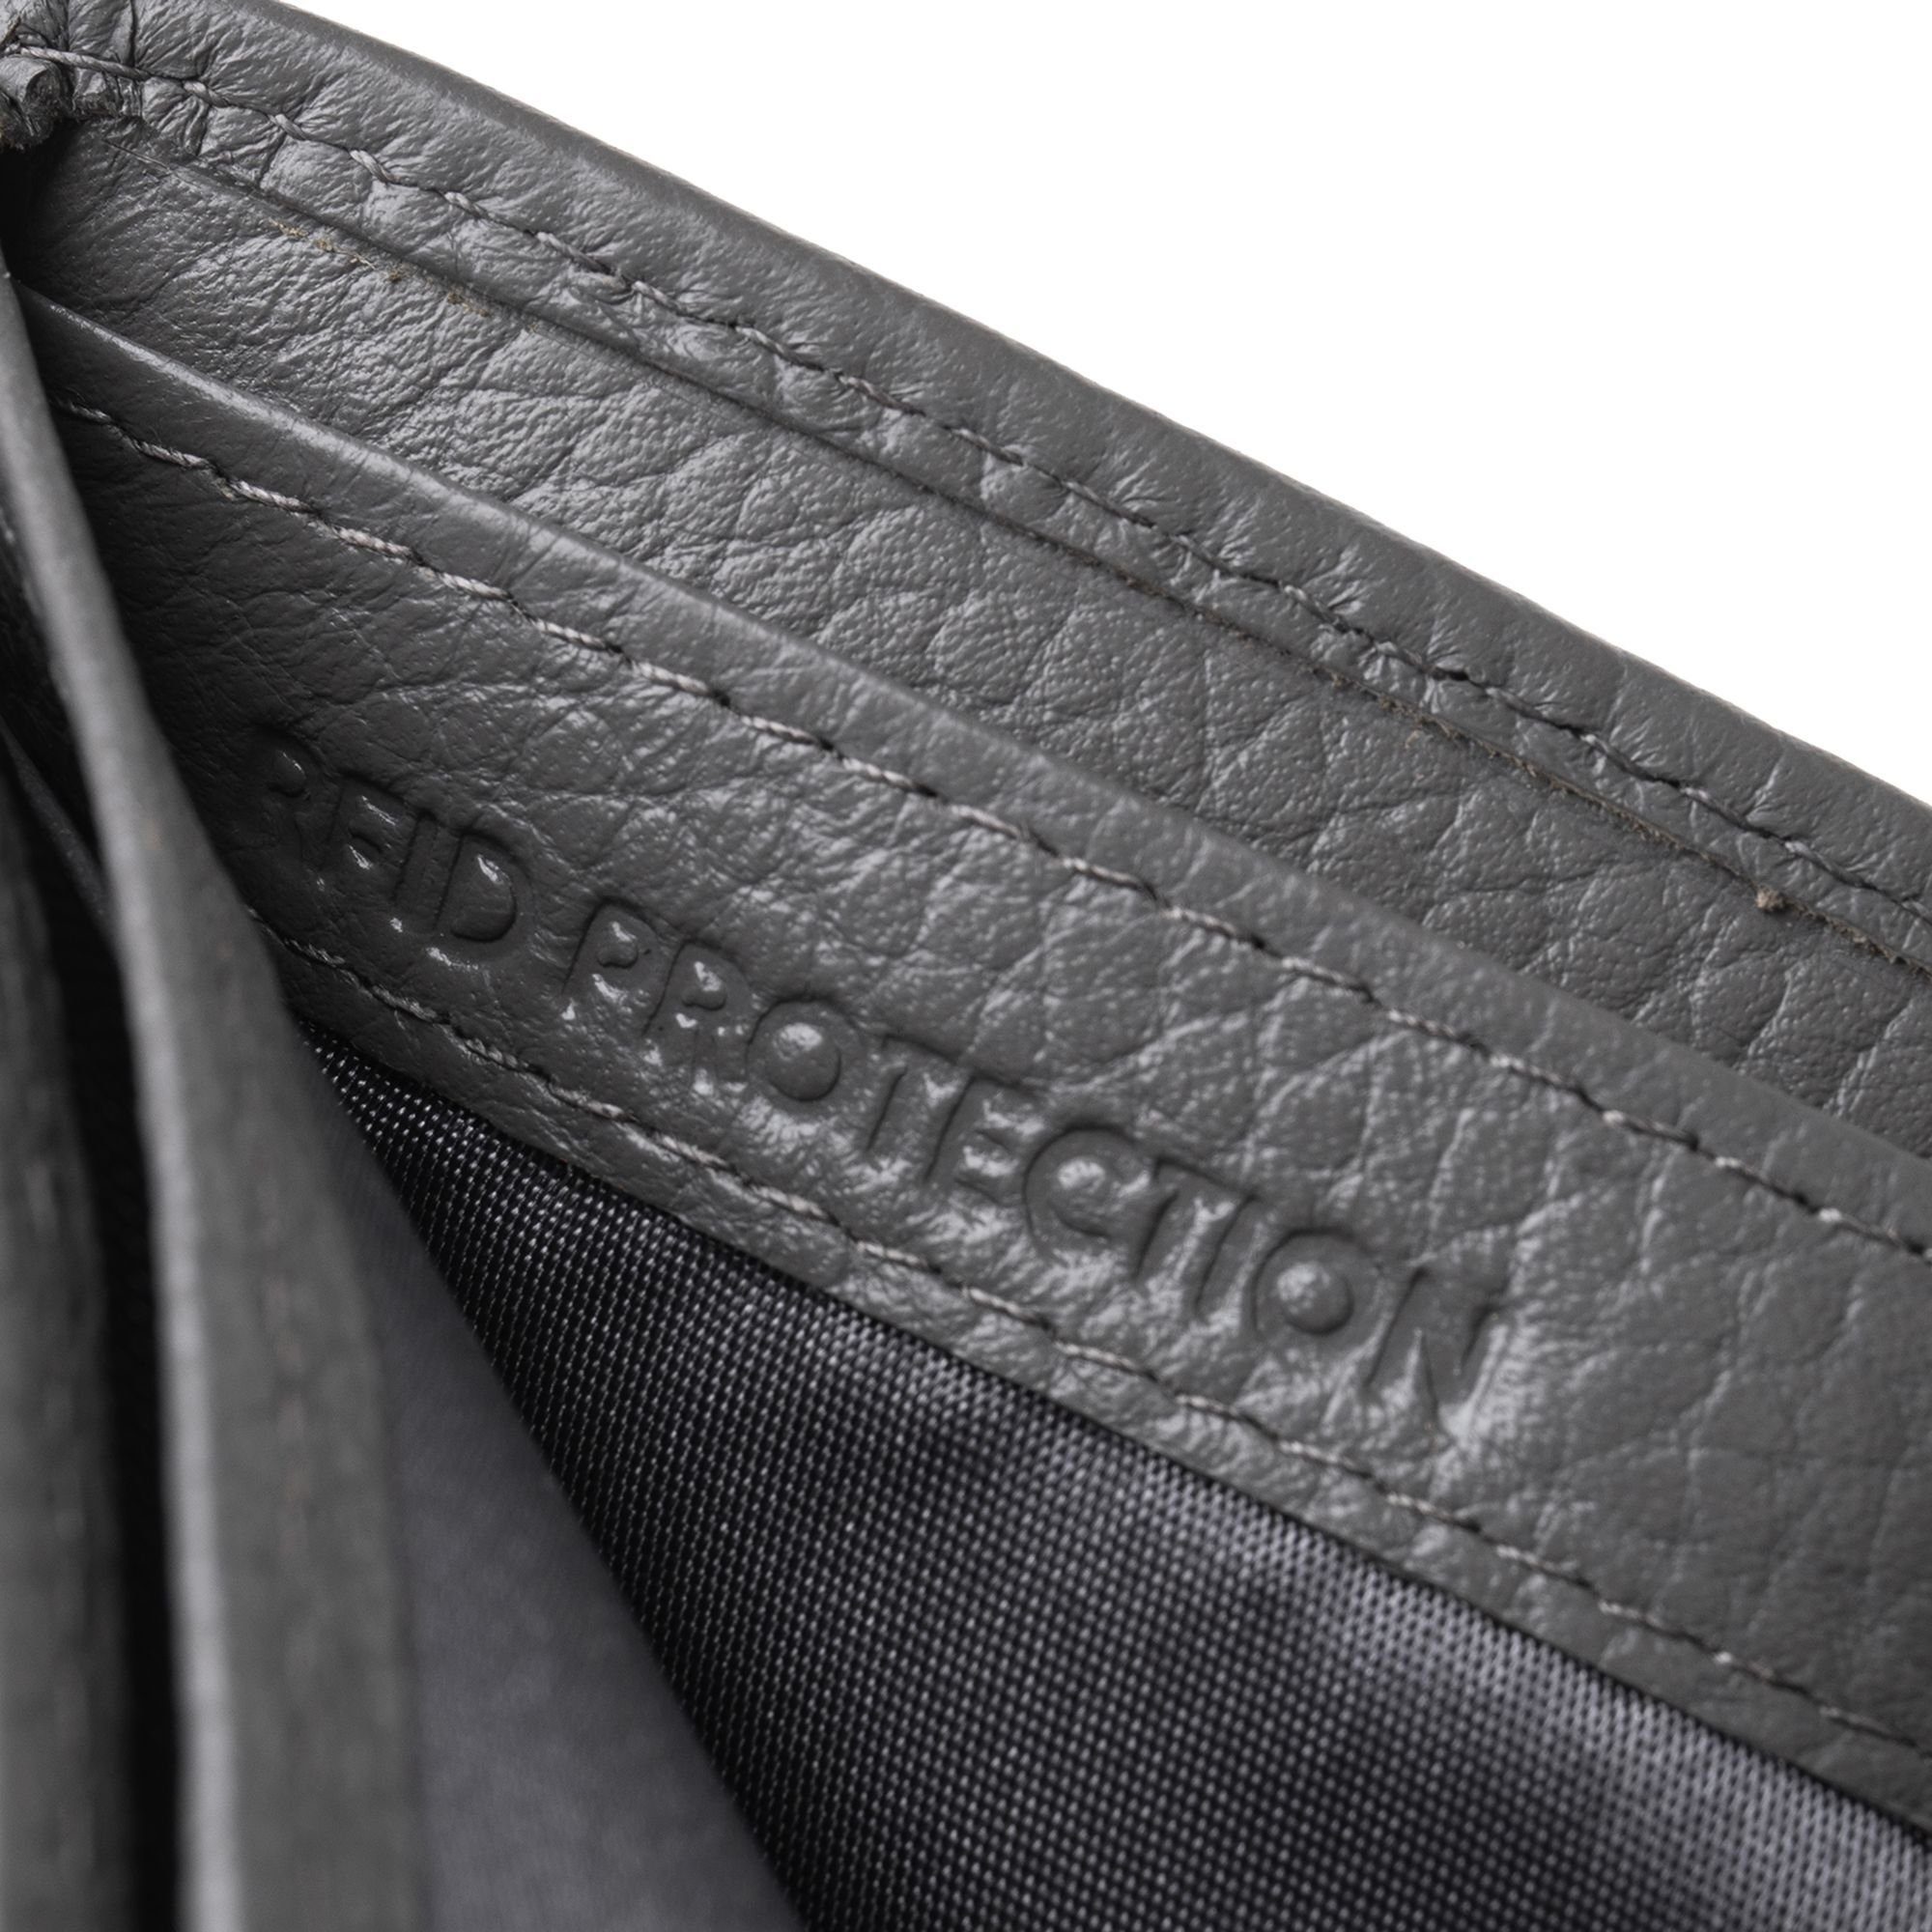 Bologna grey Leder Geldbörse Lazarotti Leather,